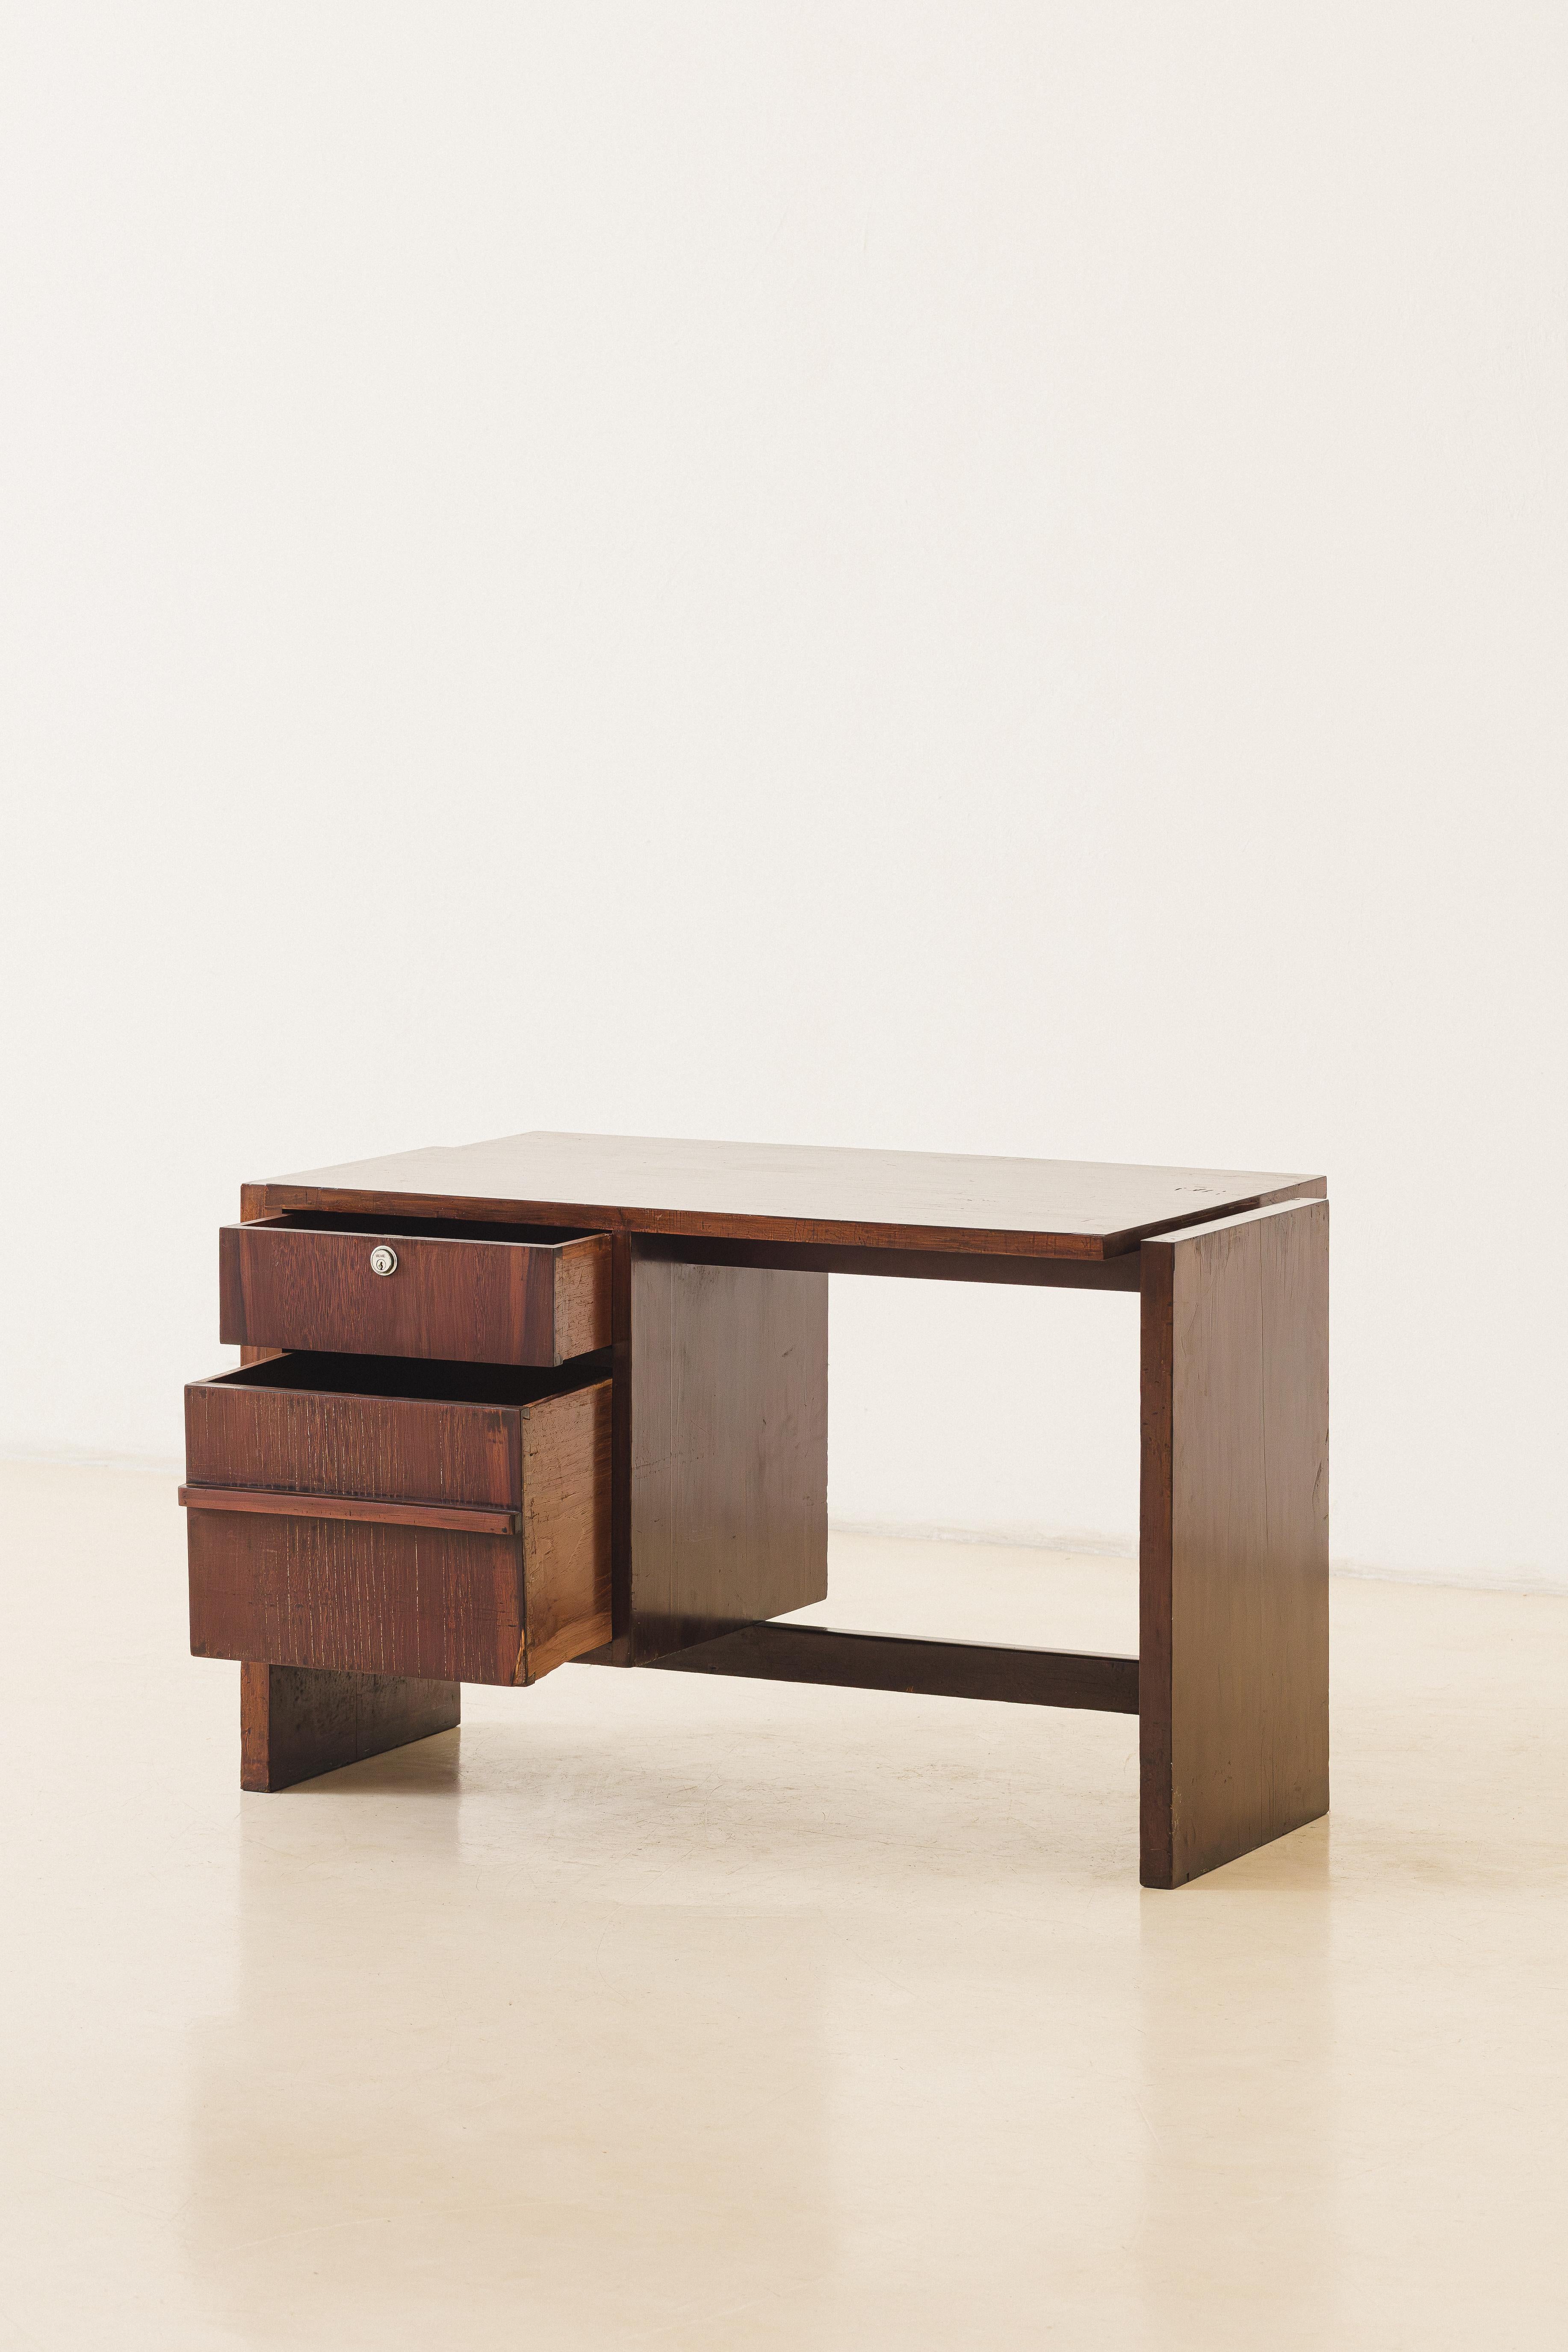 Rosewood Desk Brazilian Midcentury Design by Joaquim Tenreiro, 1960s  For Sale 3